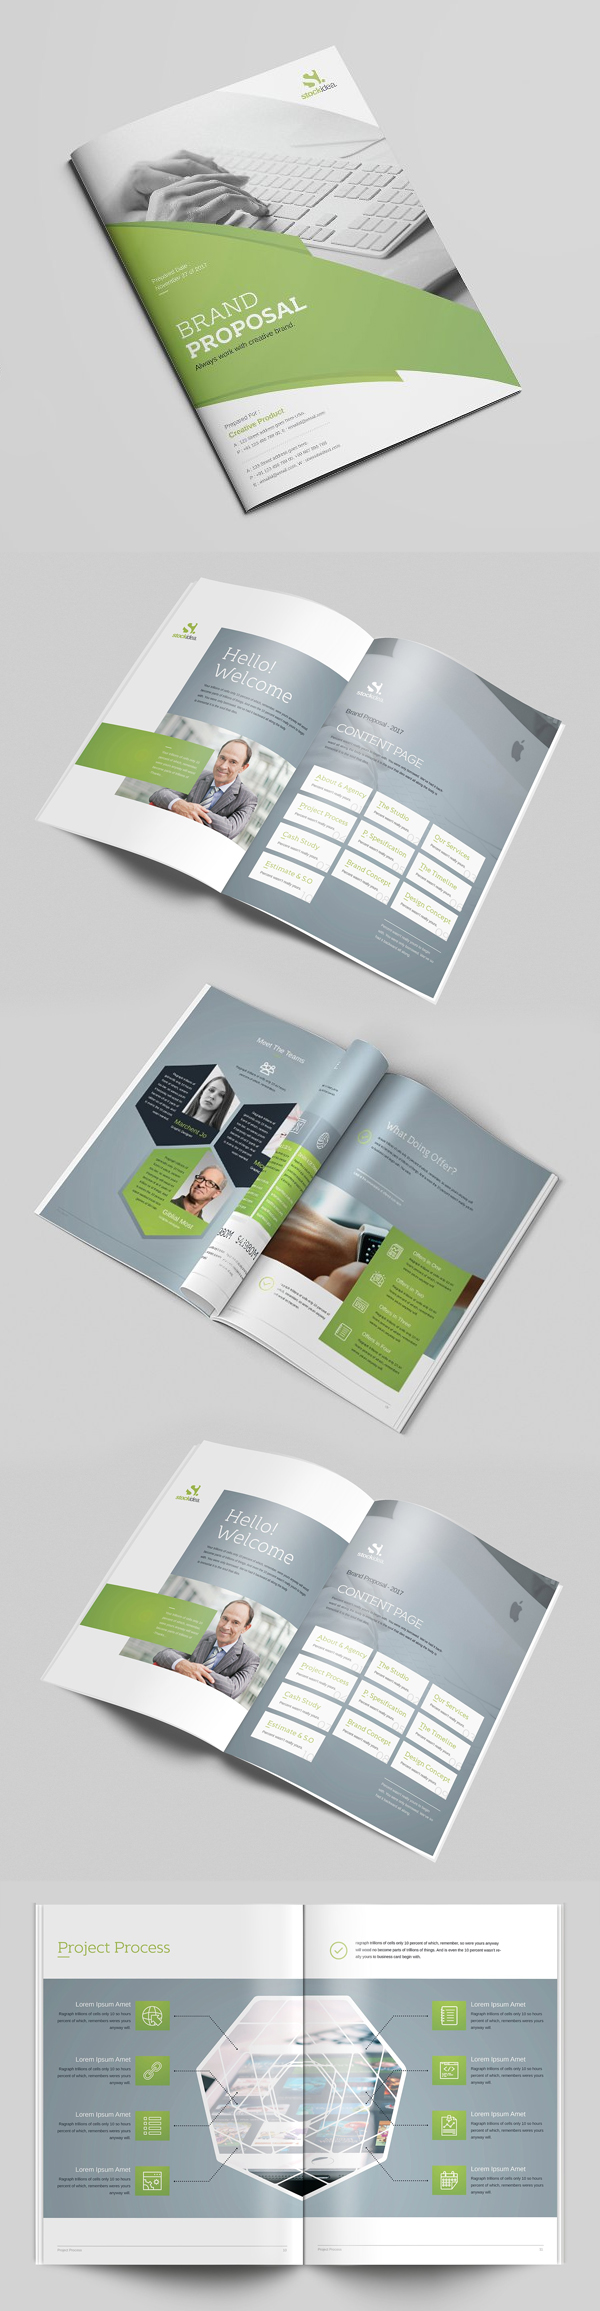 100 Professional Corporate Brochure Templates - 75